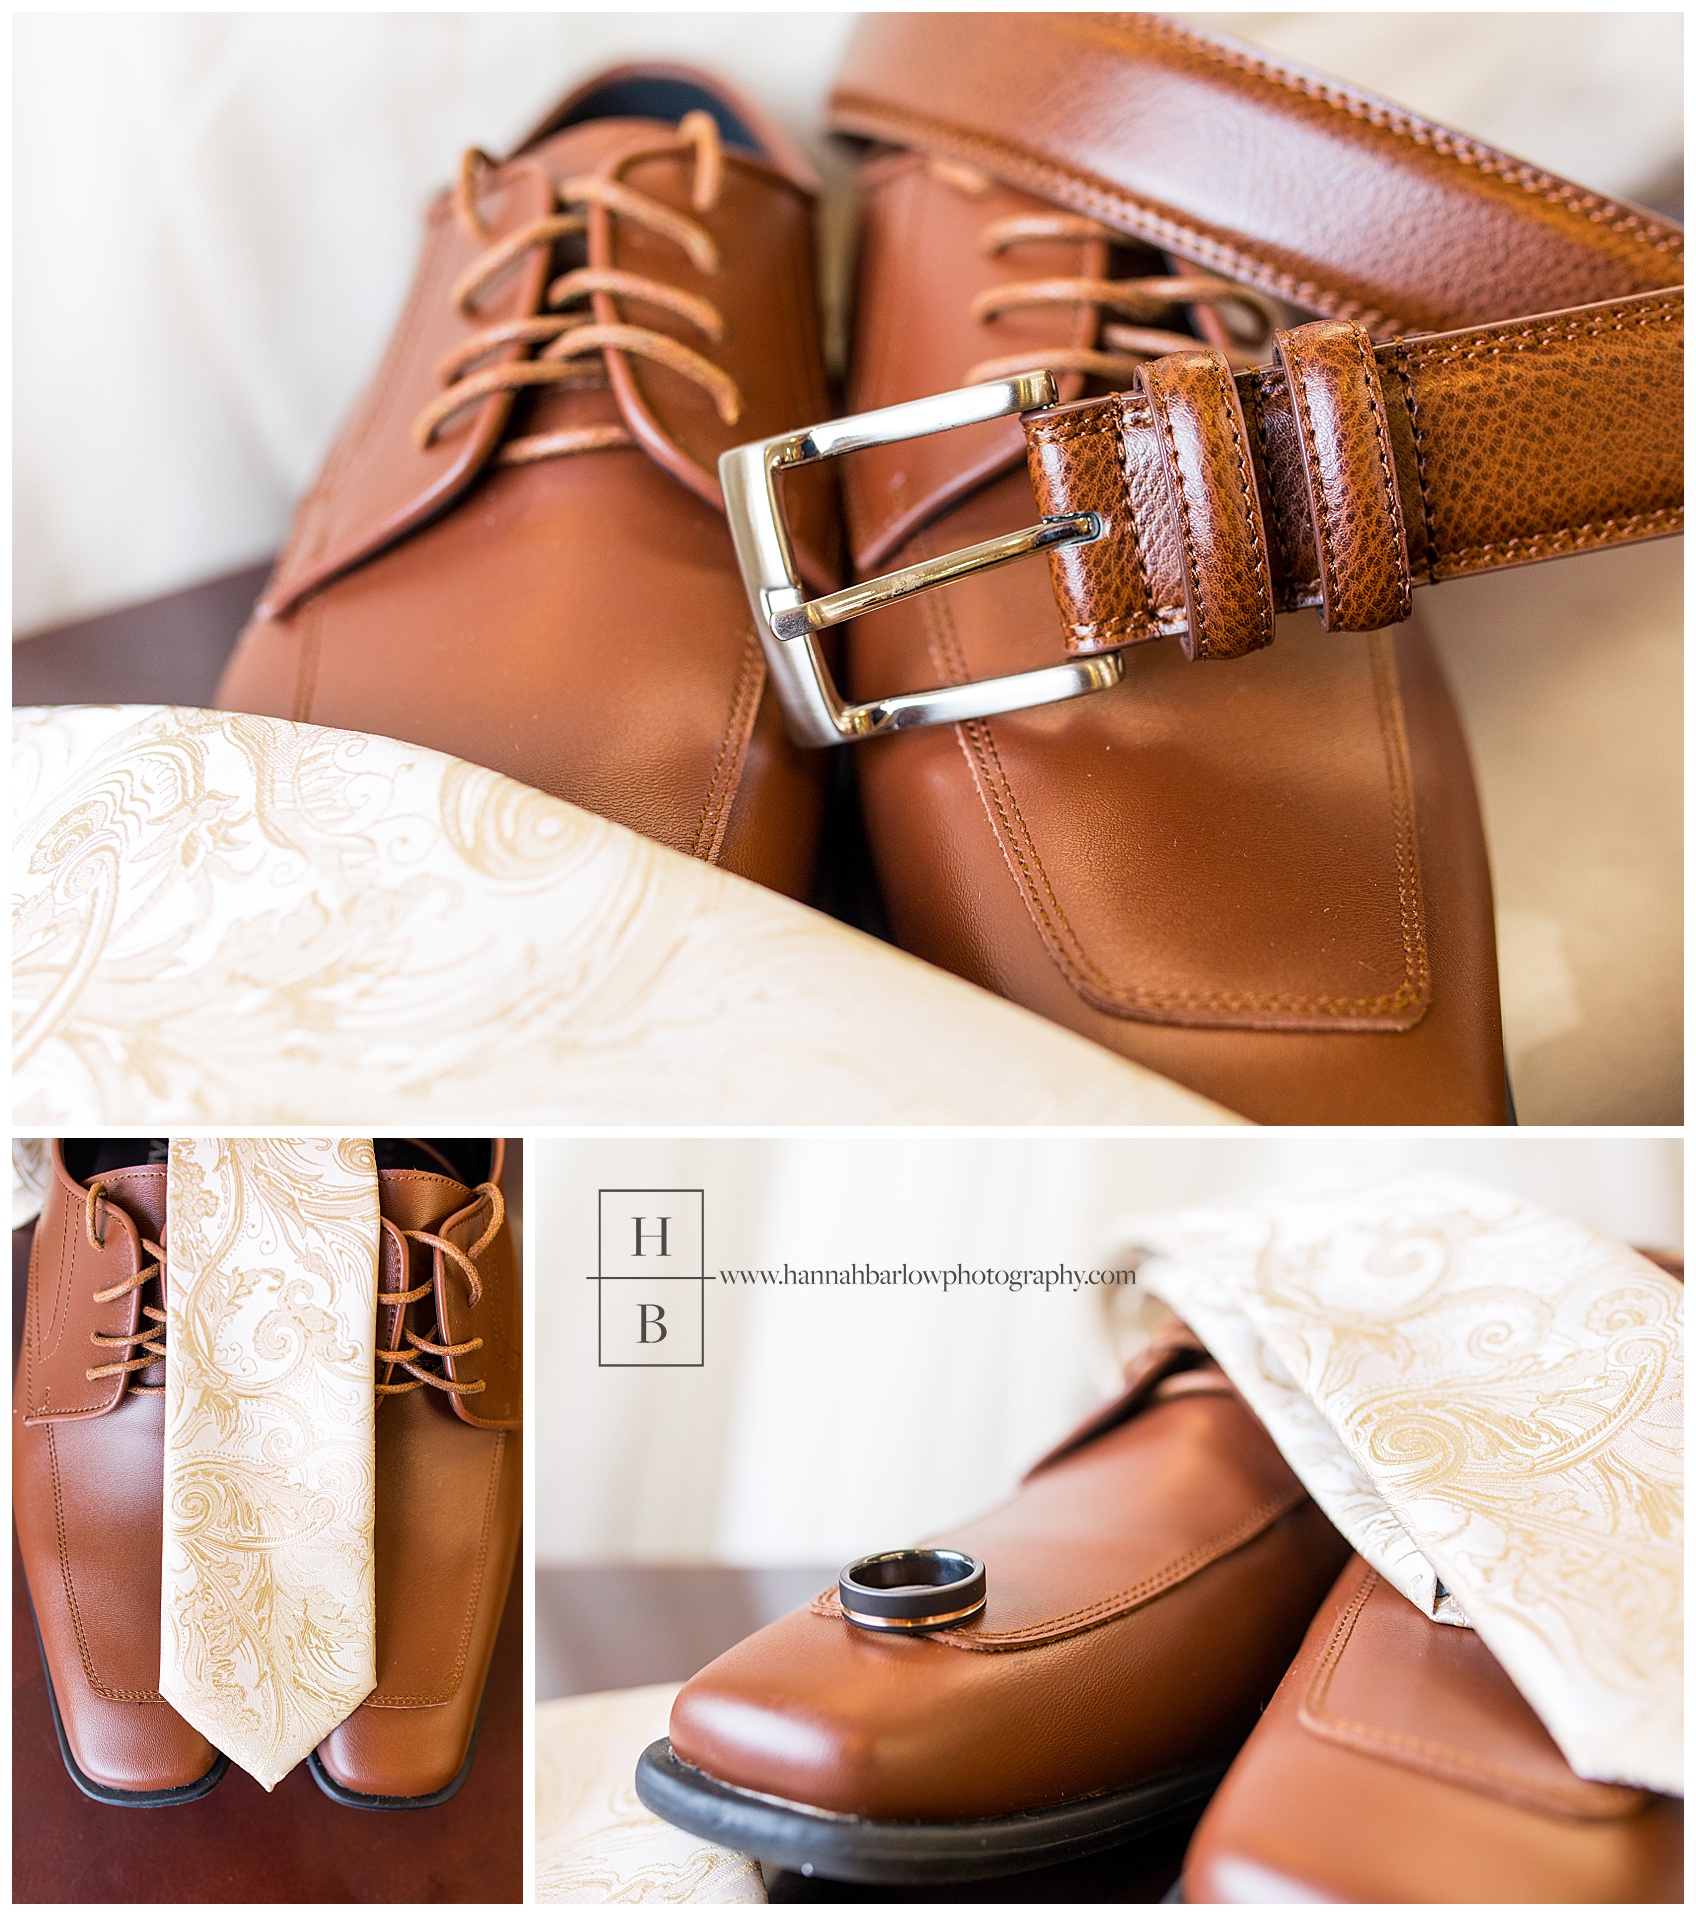 University Club Wedding Groom Detail Photos Shoes, Tie, and Belt